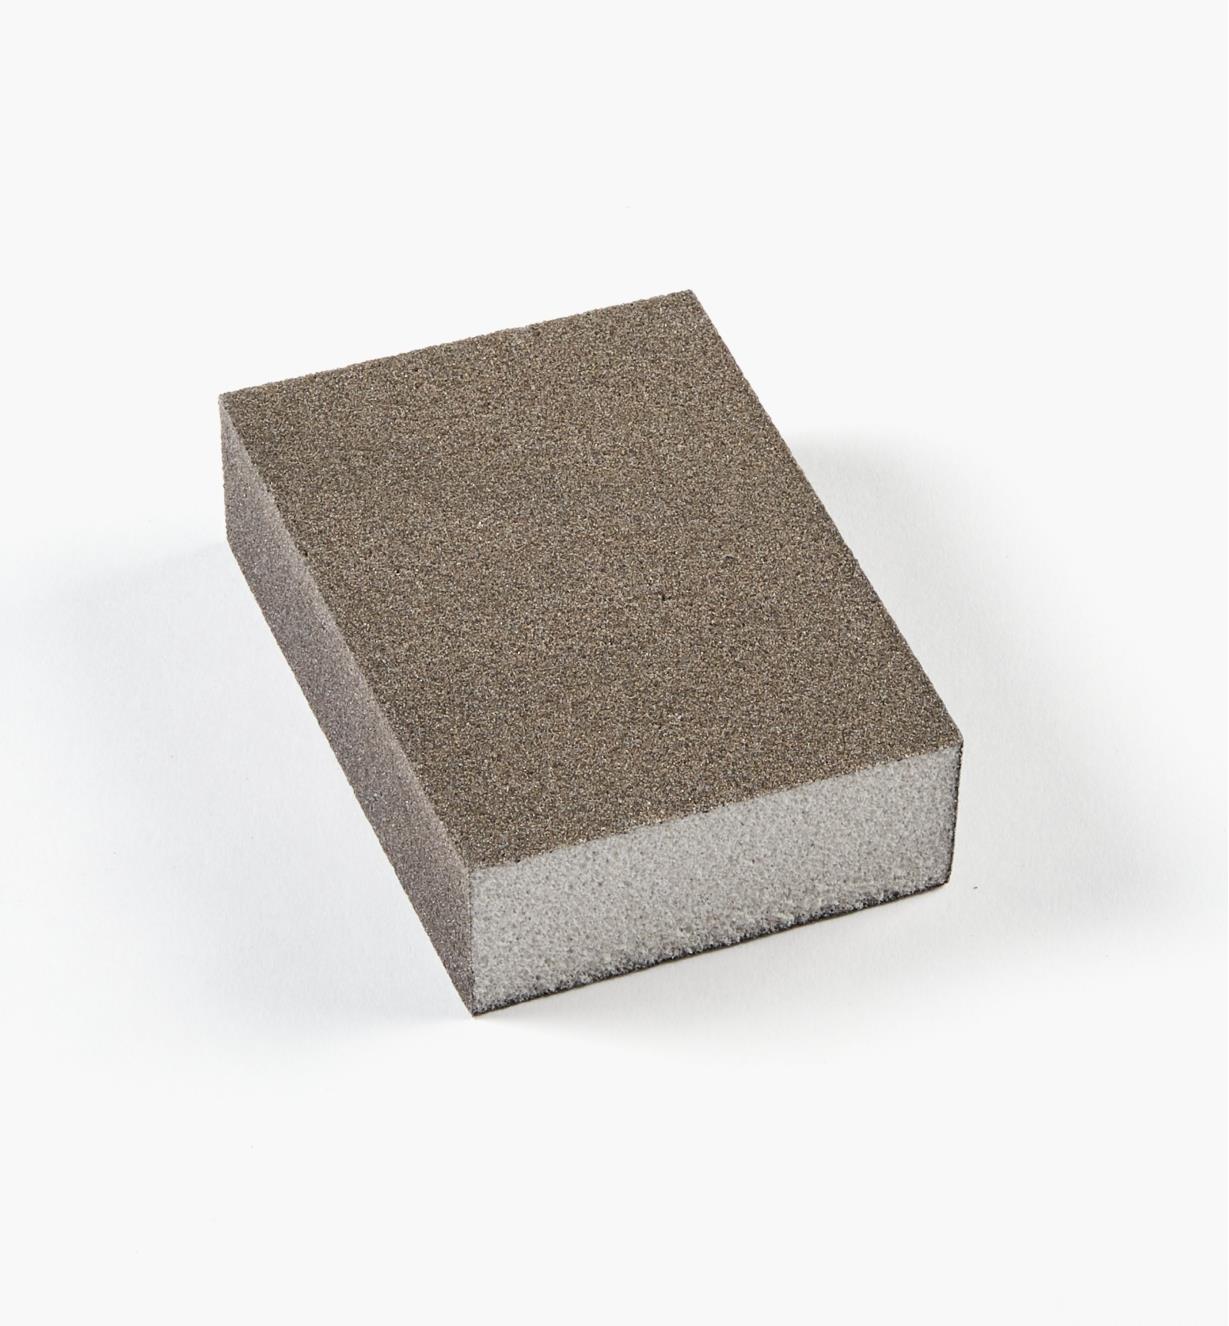 08K0442 - 150x Four-Sided Abrasive Sponge, ea.